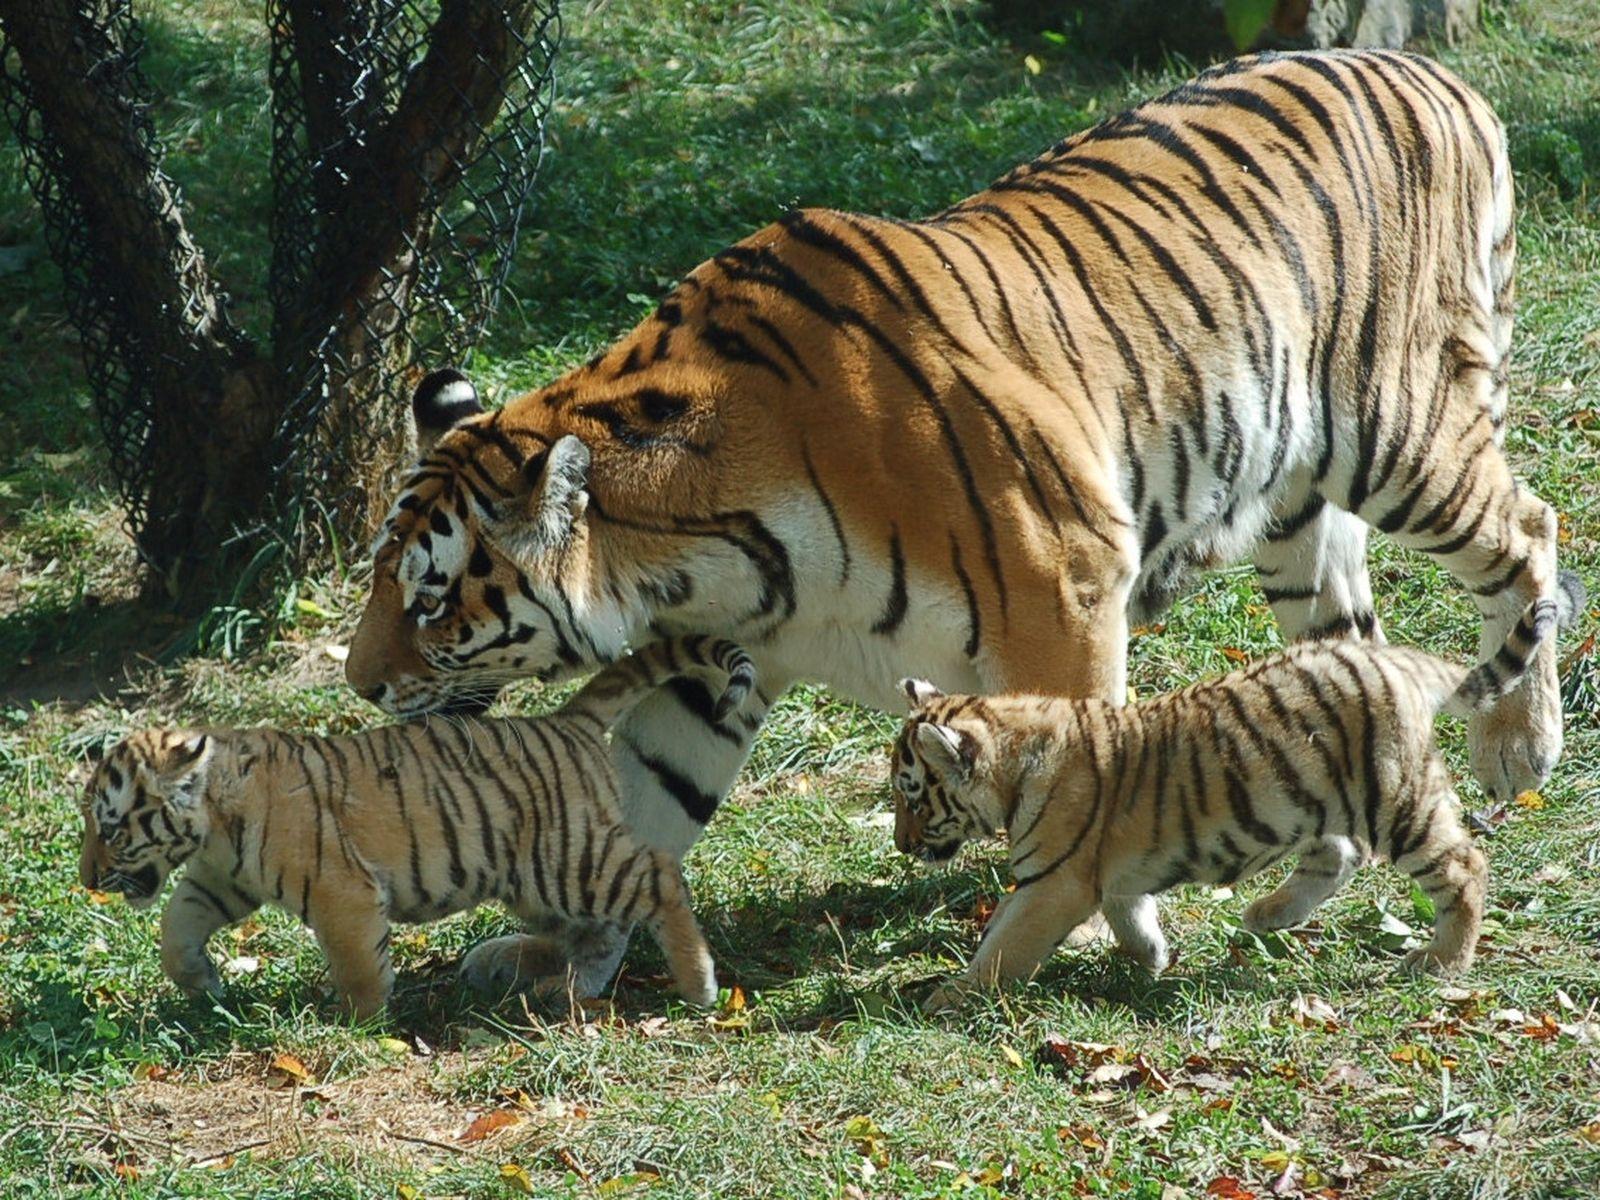 Фото с Тигрицами и Тигрятами